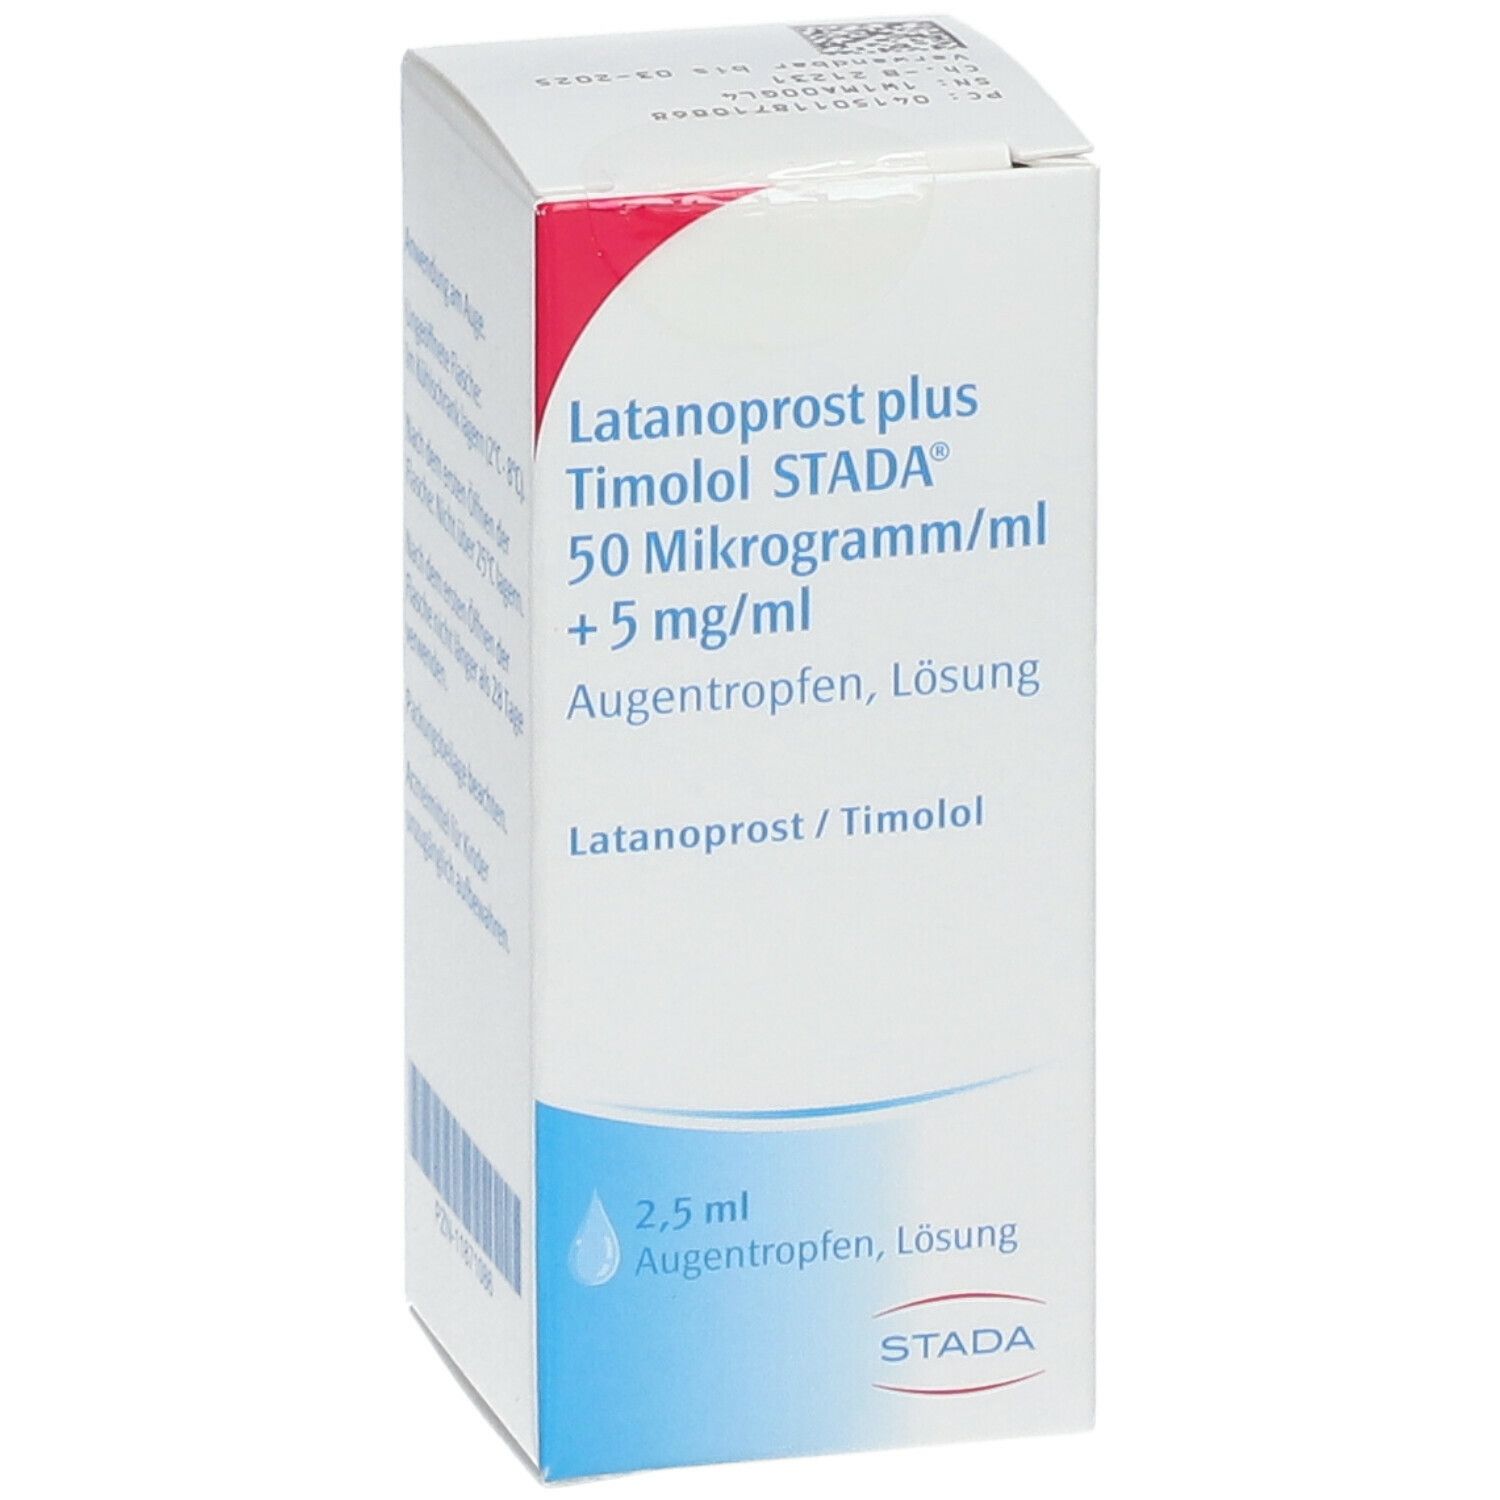 Latanoprost plus Timolol STADA® 50 µg/ml + 5 mg/ml Augentropfen, Lösung